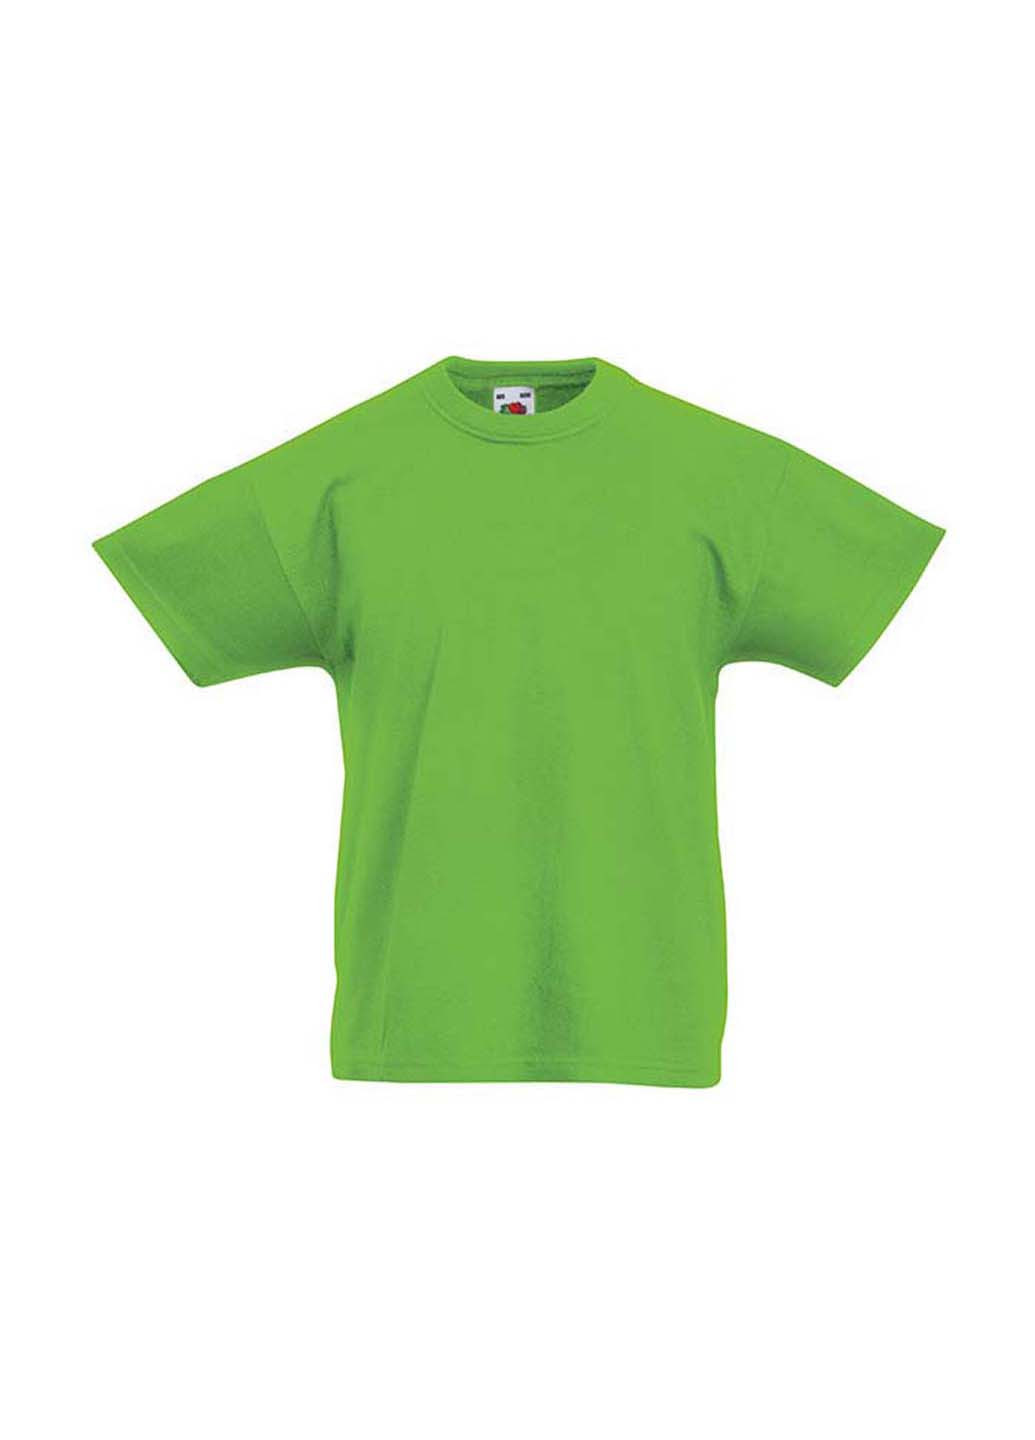 Лаймовая демисезонная футболка Fruit of the Loom D0610190LM164